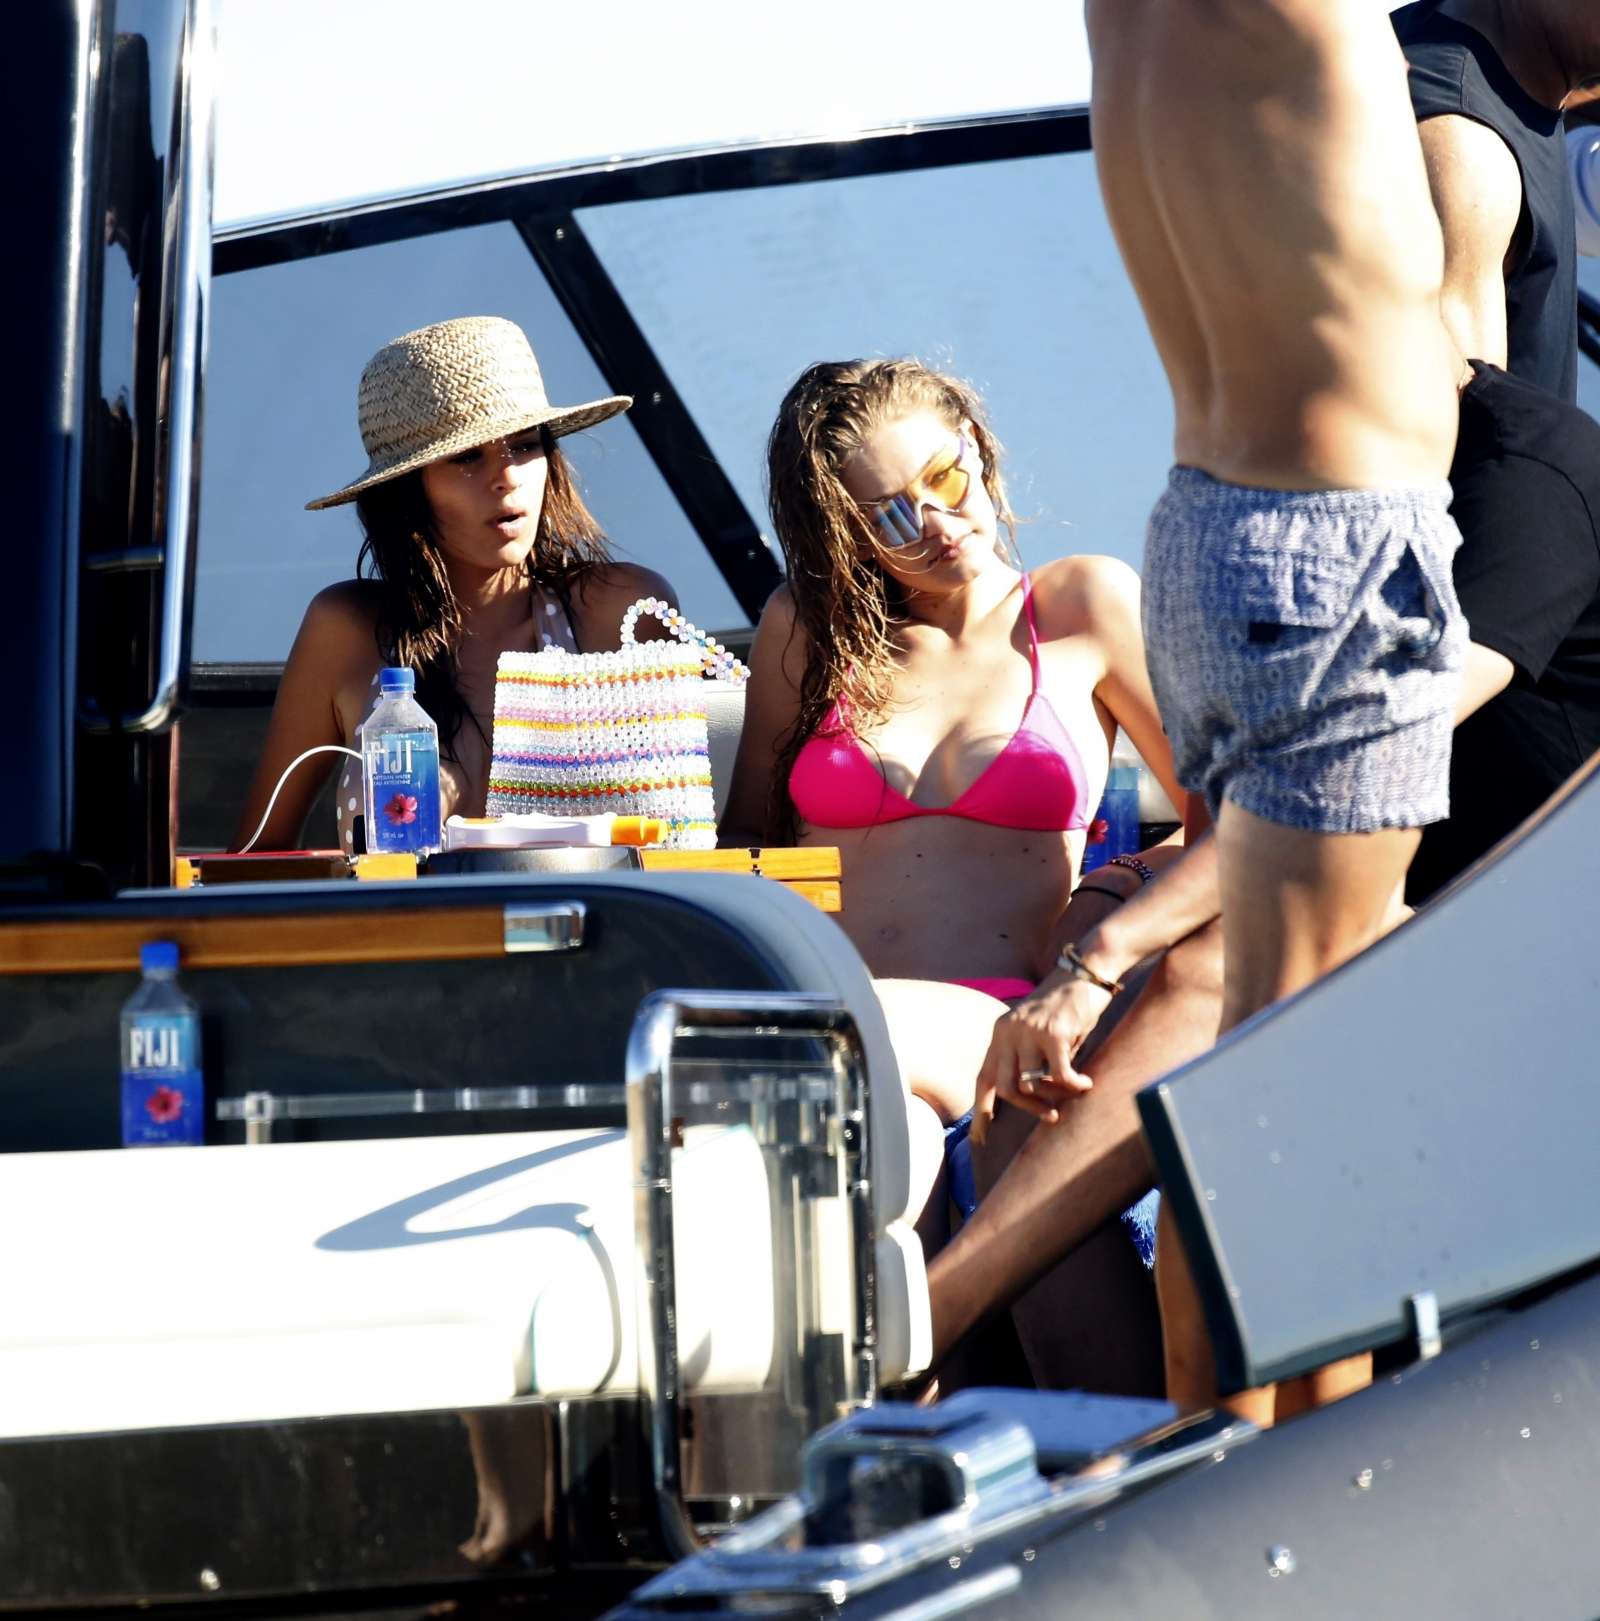 Gigi Hadid in Pink Bikini on a boat in Mykonos